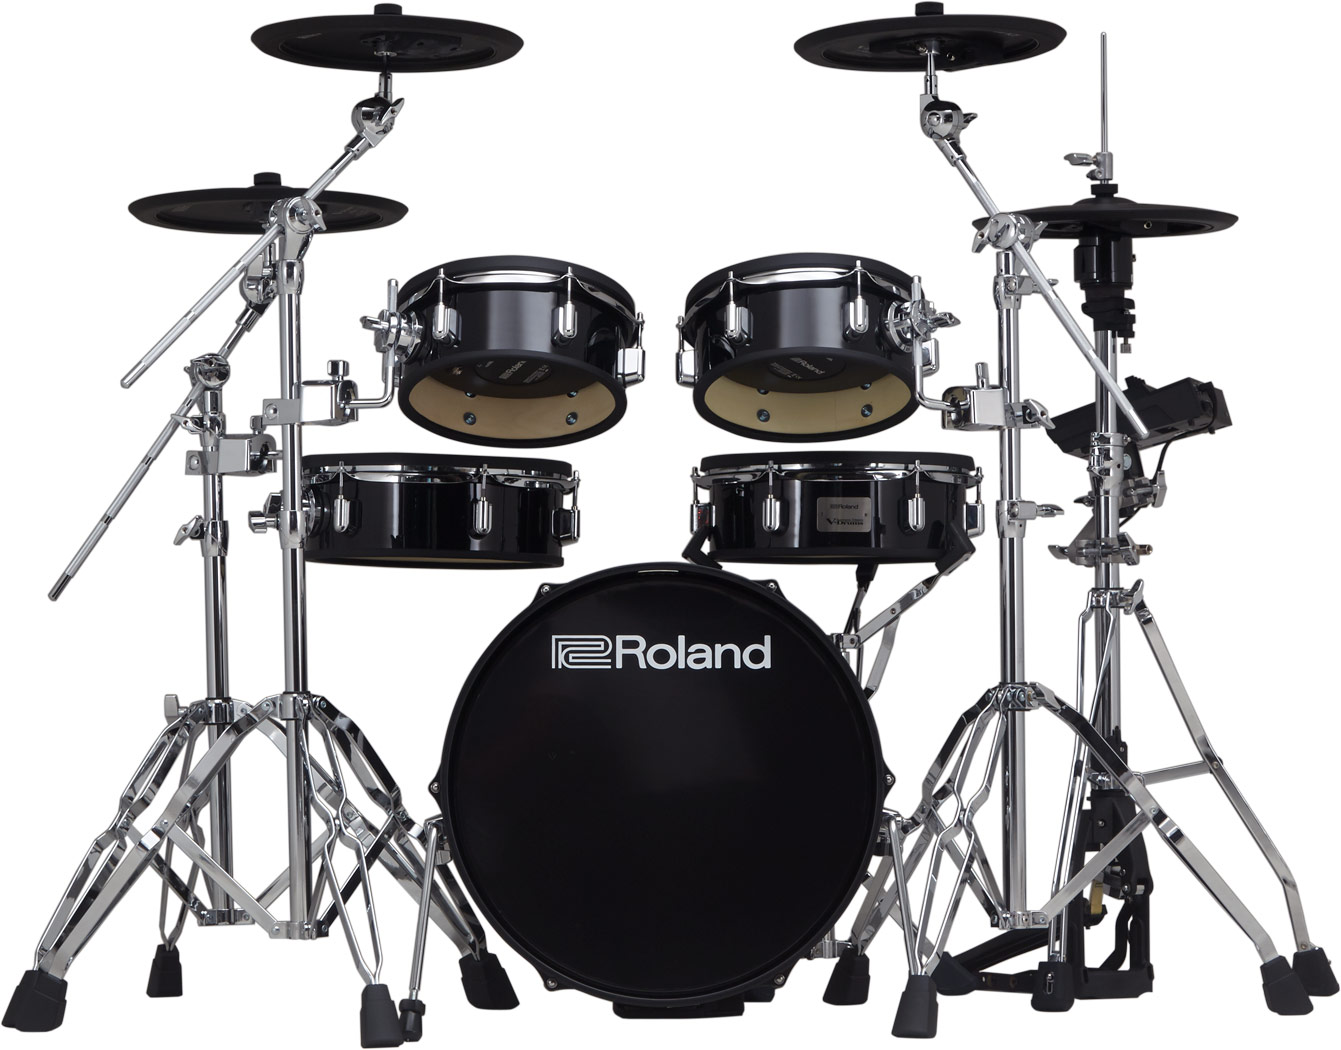 Roland VAD306 drumkit